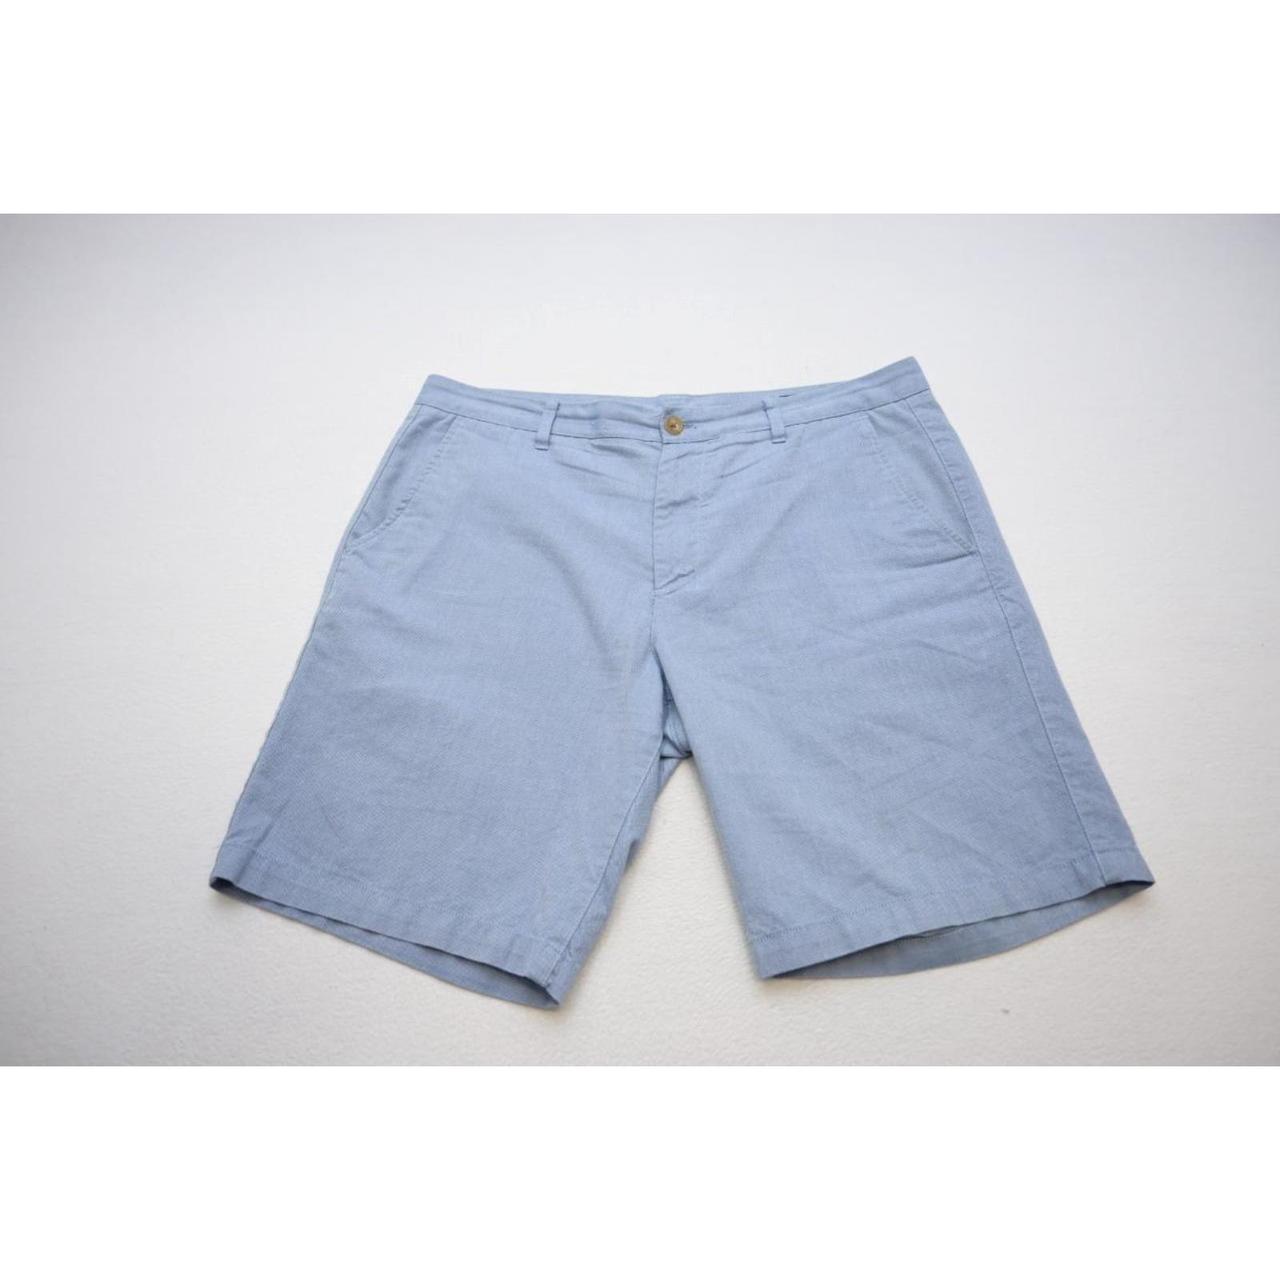 Bonobos Men's Blue and Khaki Shorts | Depop